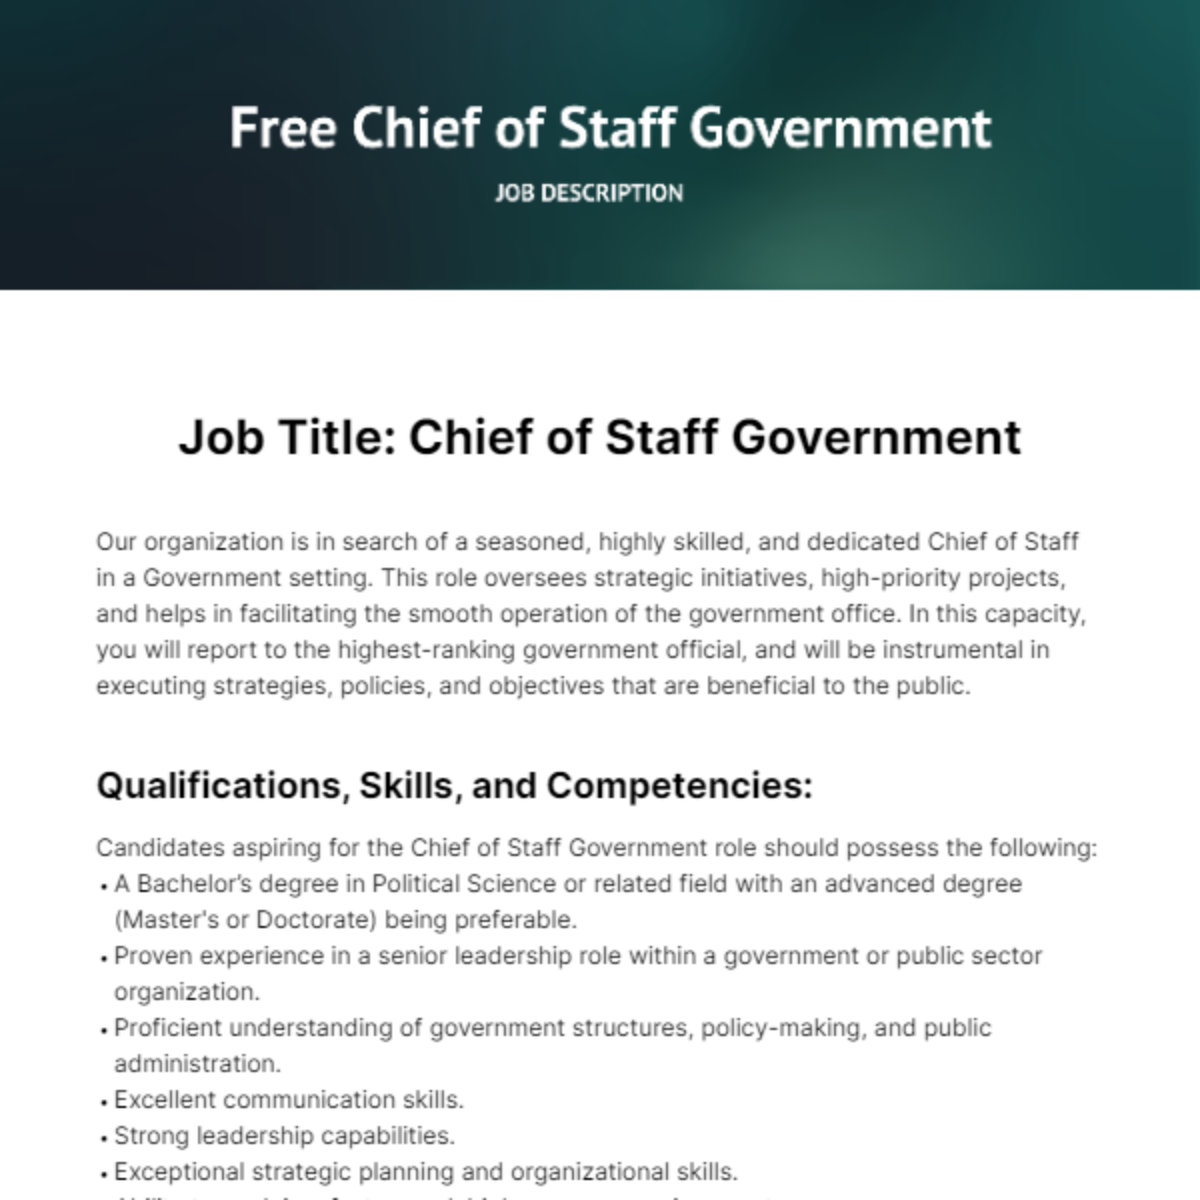 Free Chief of Staff Government Job Description Template